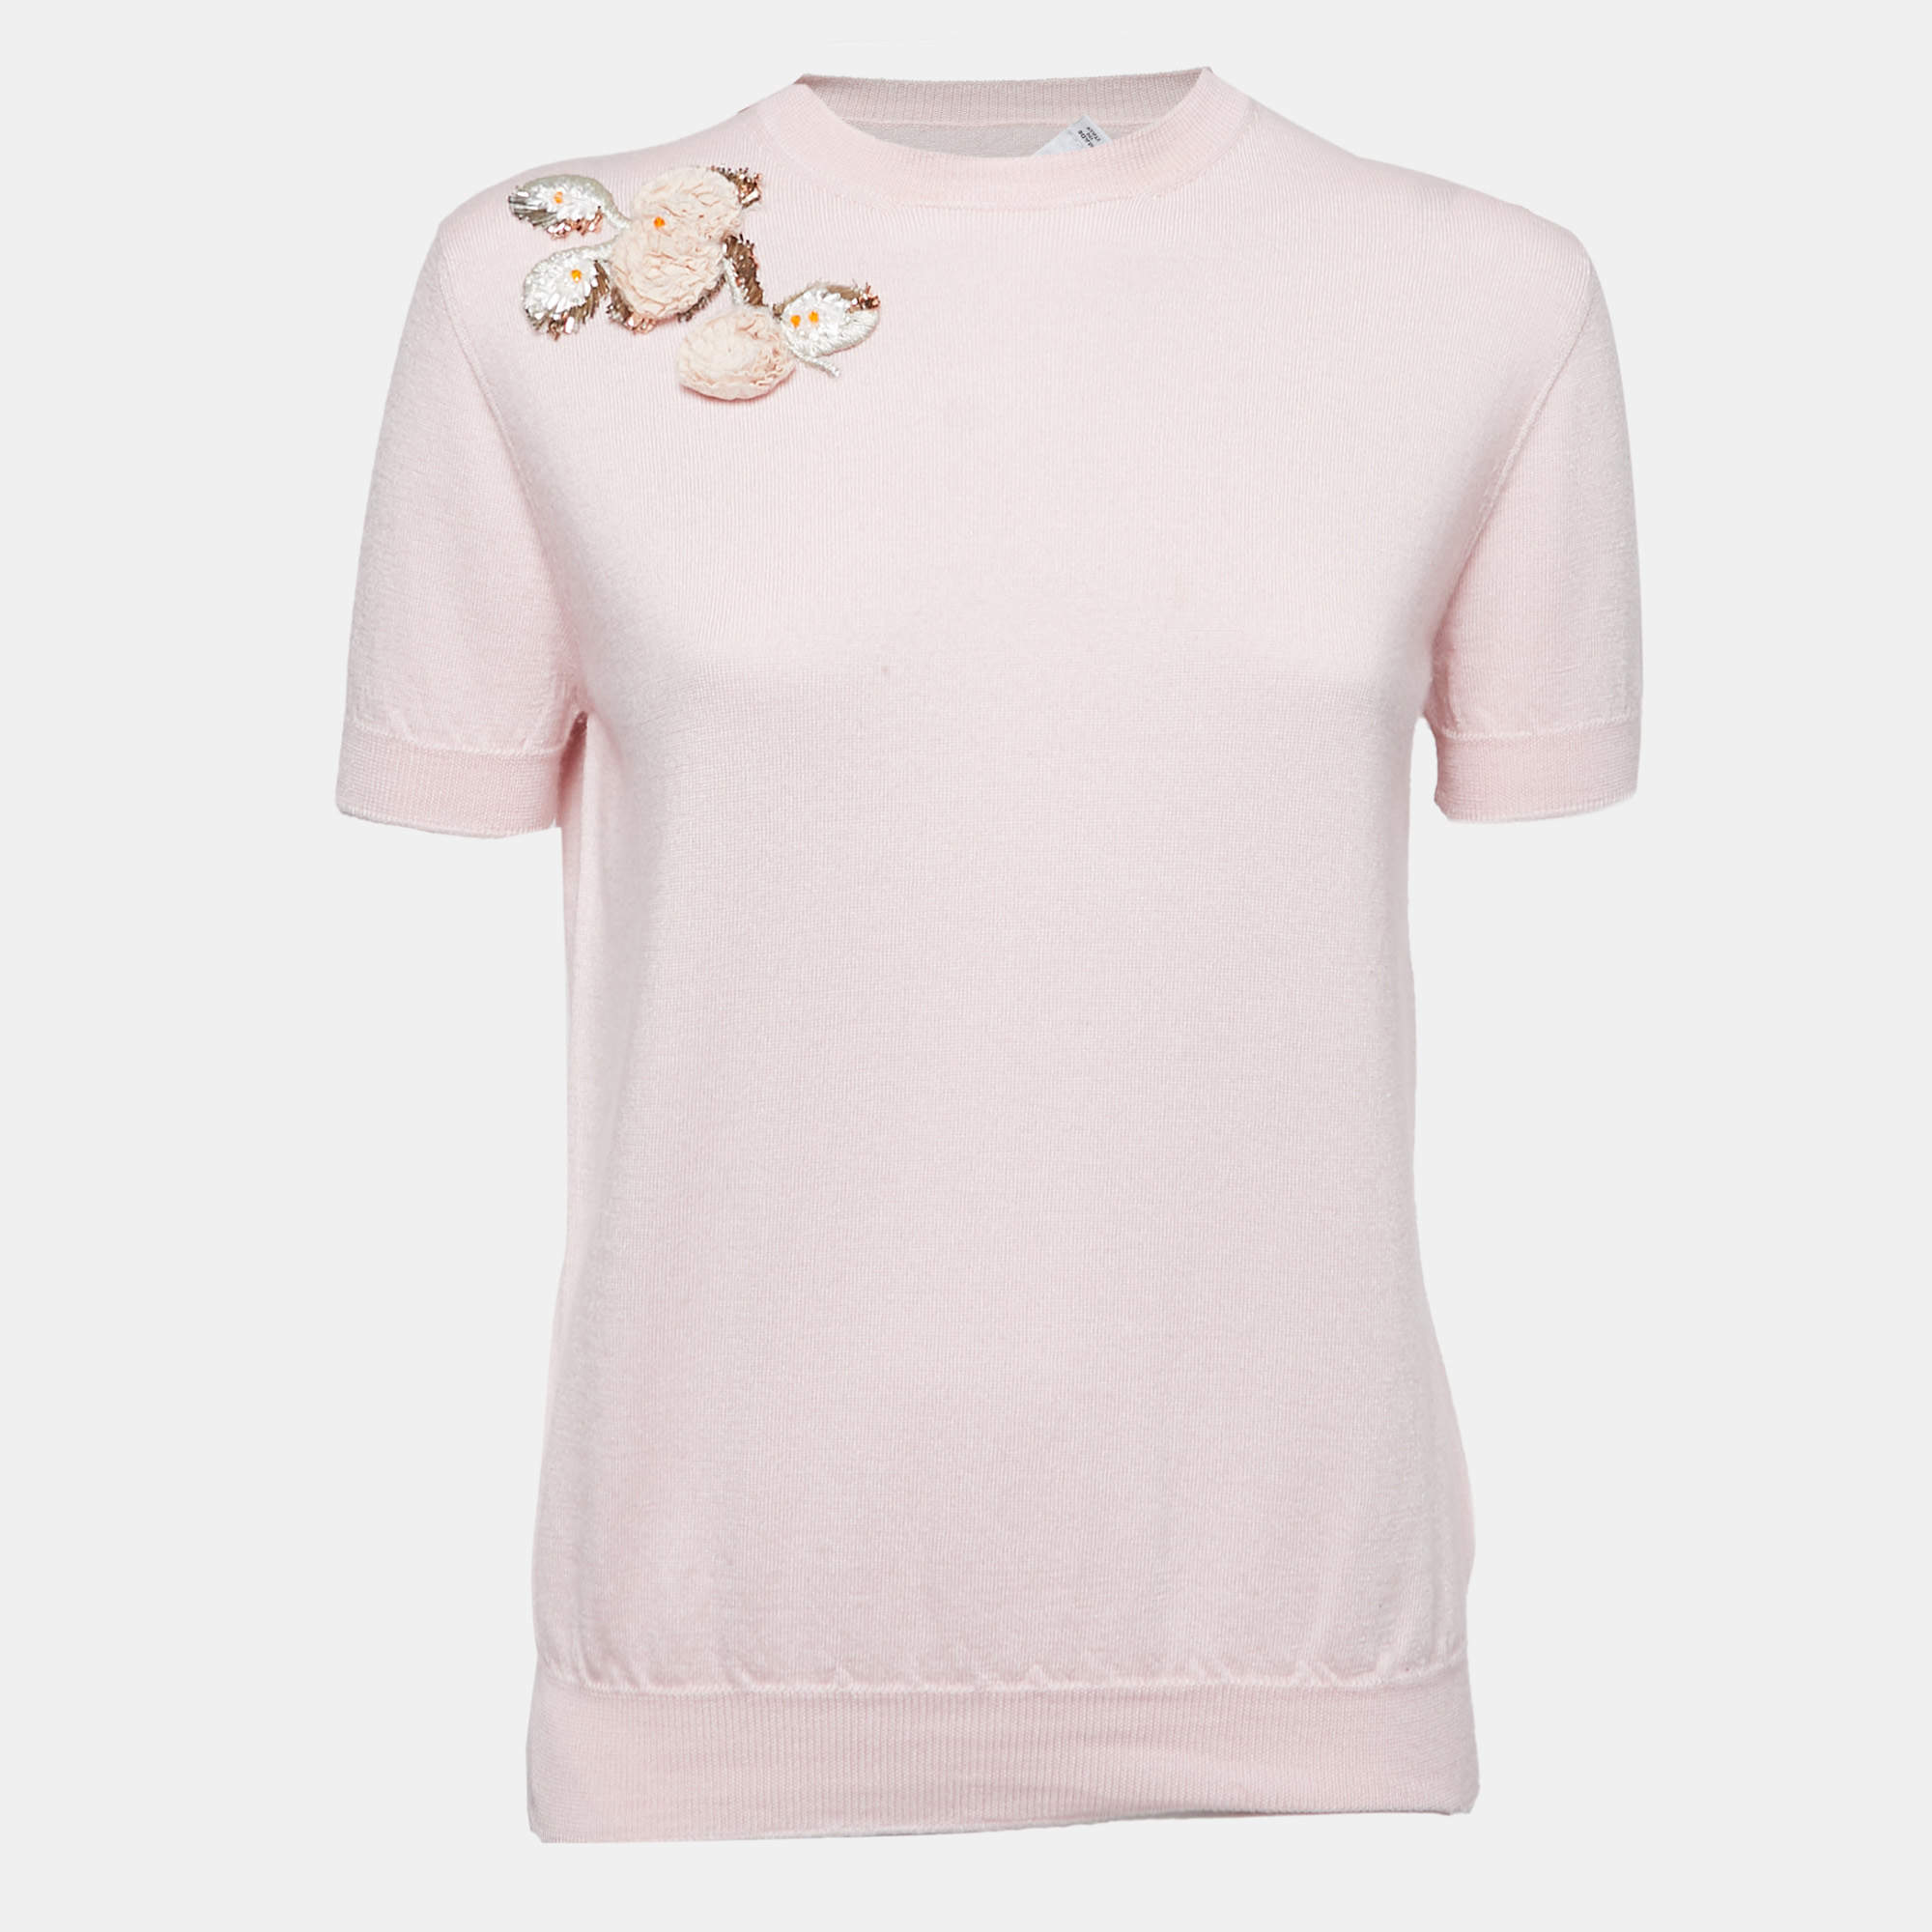 Dior Light Pink Knit Floral Applique Half Sleeve Sweater Top L